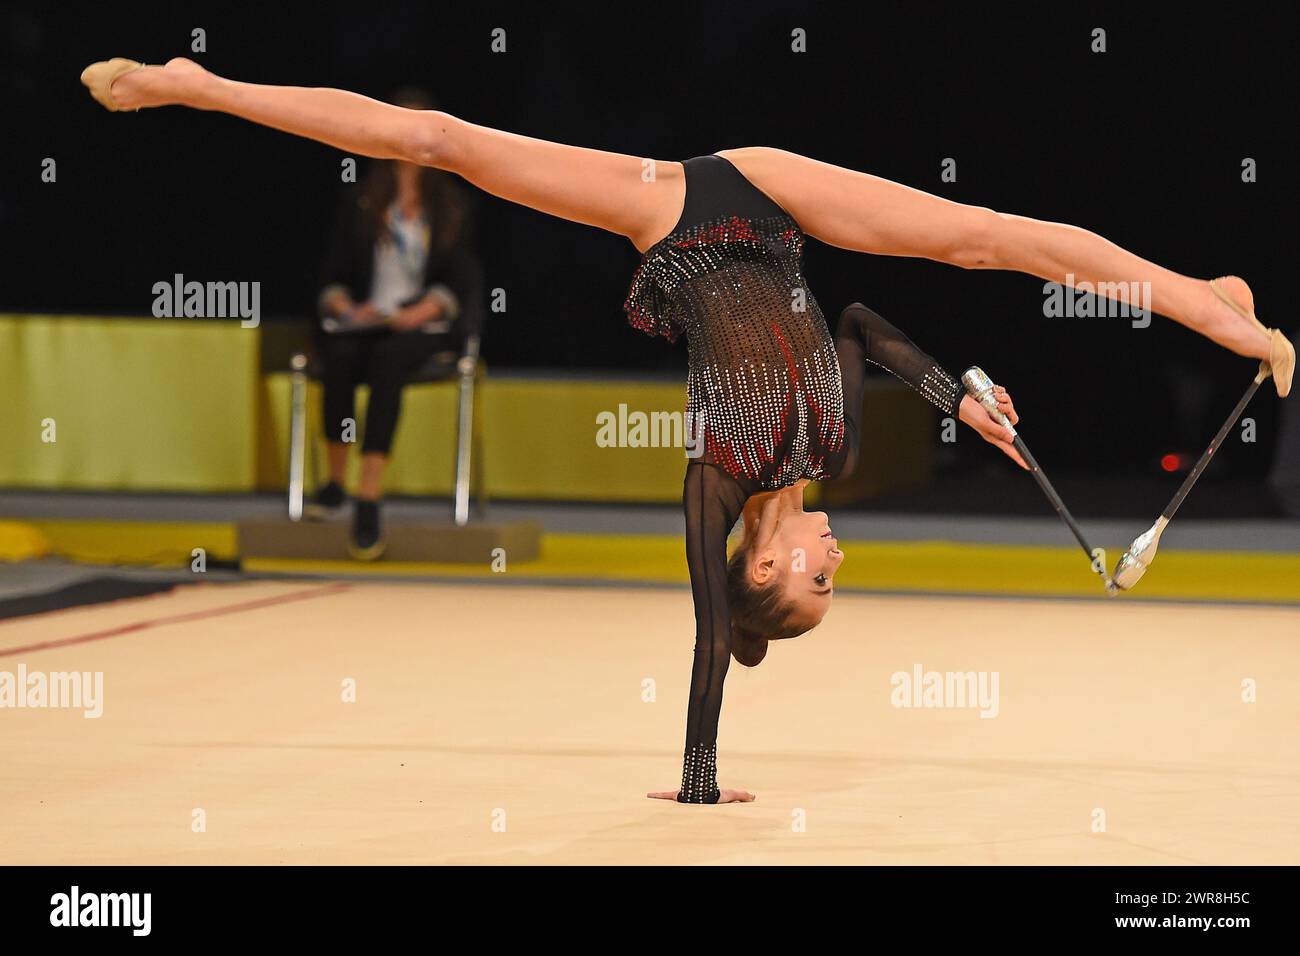 gymnast perform at rhythmic gymnastics competition Stock Photo